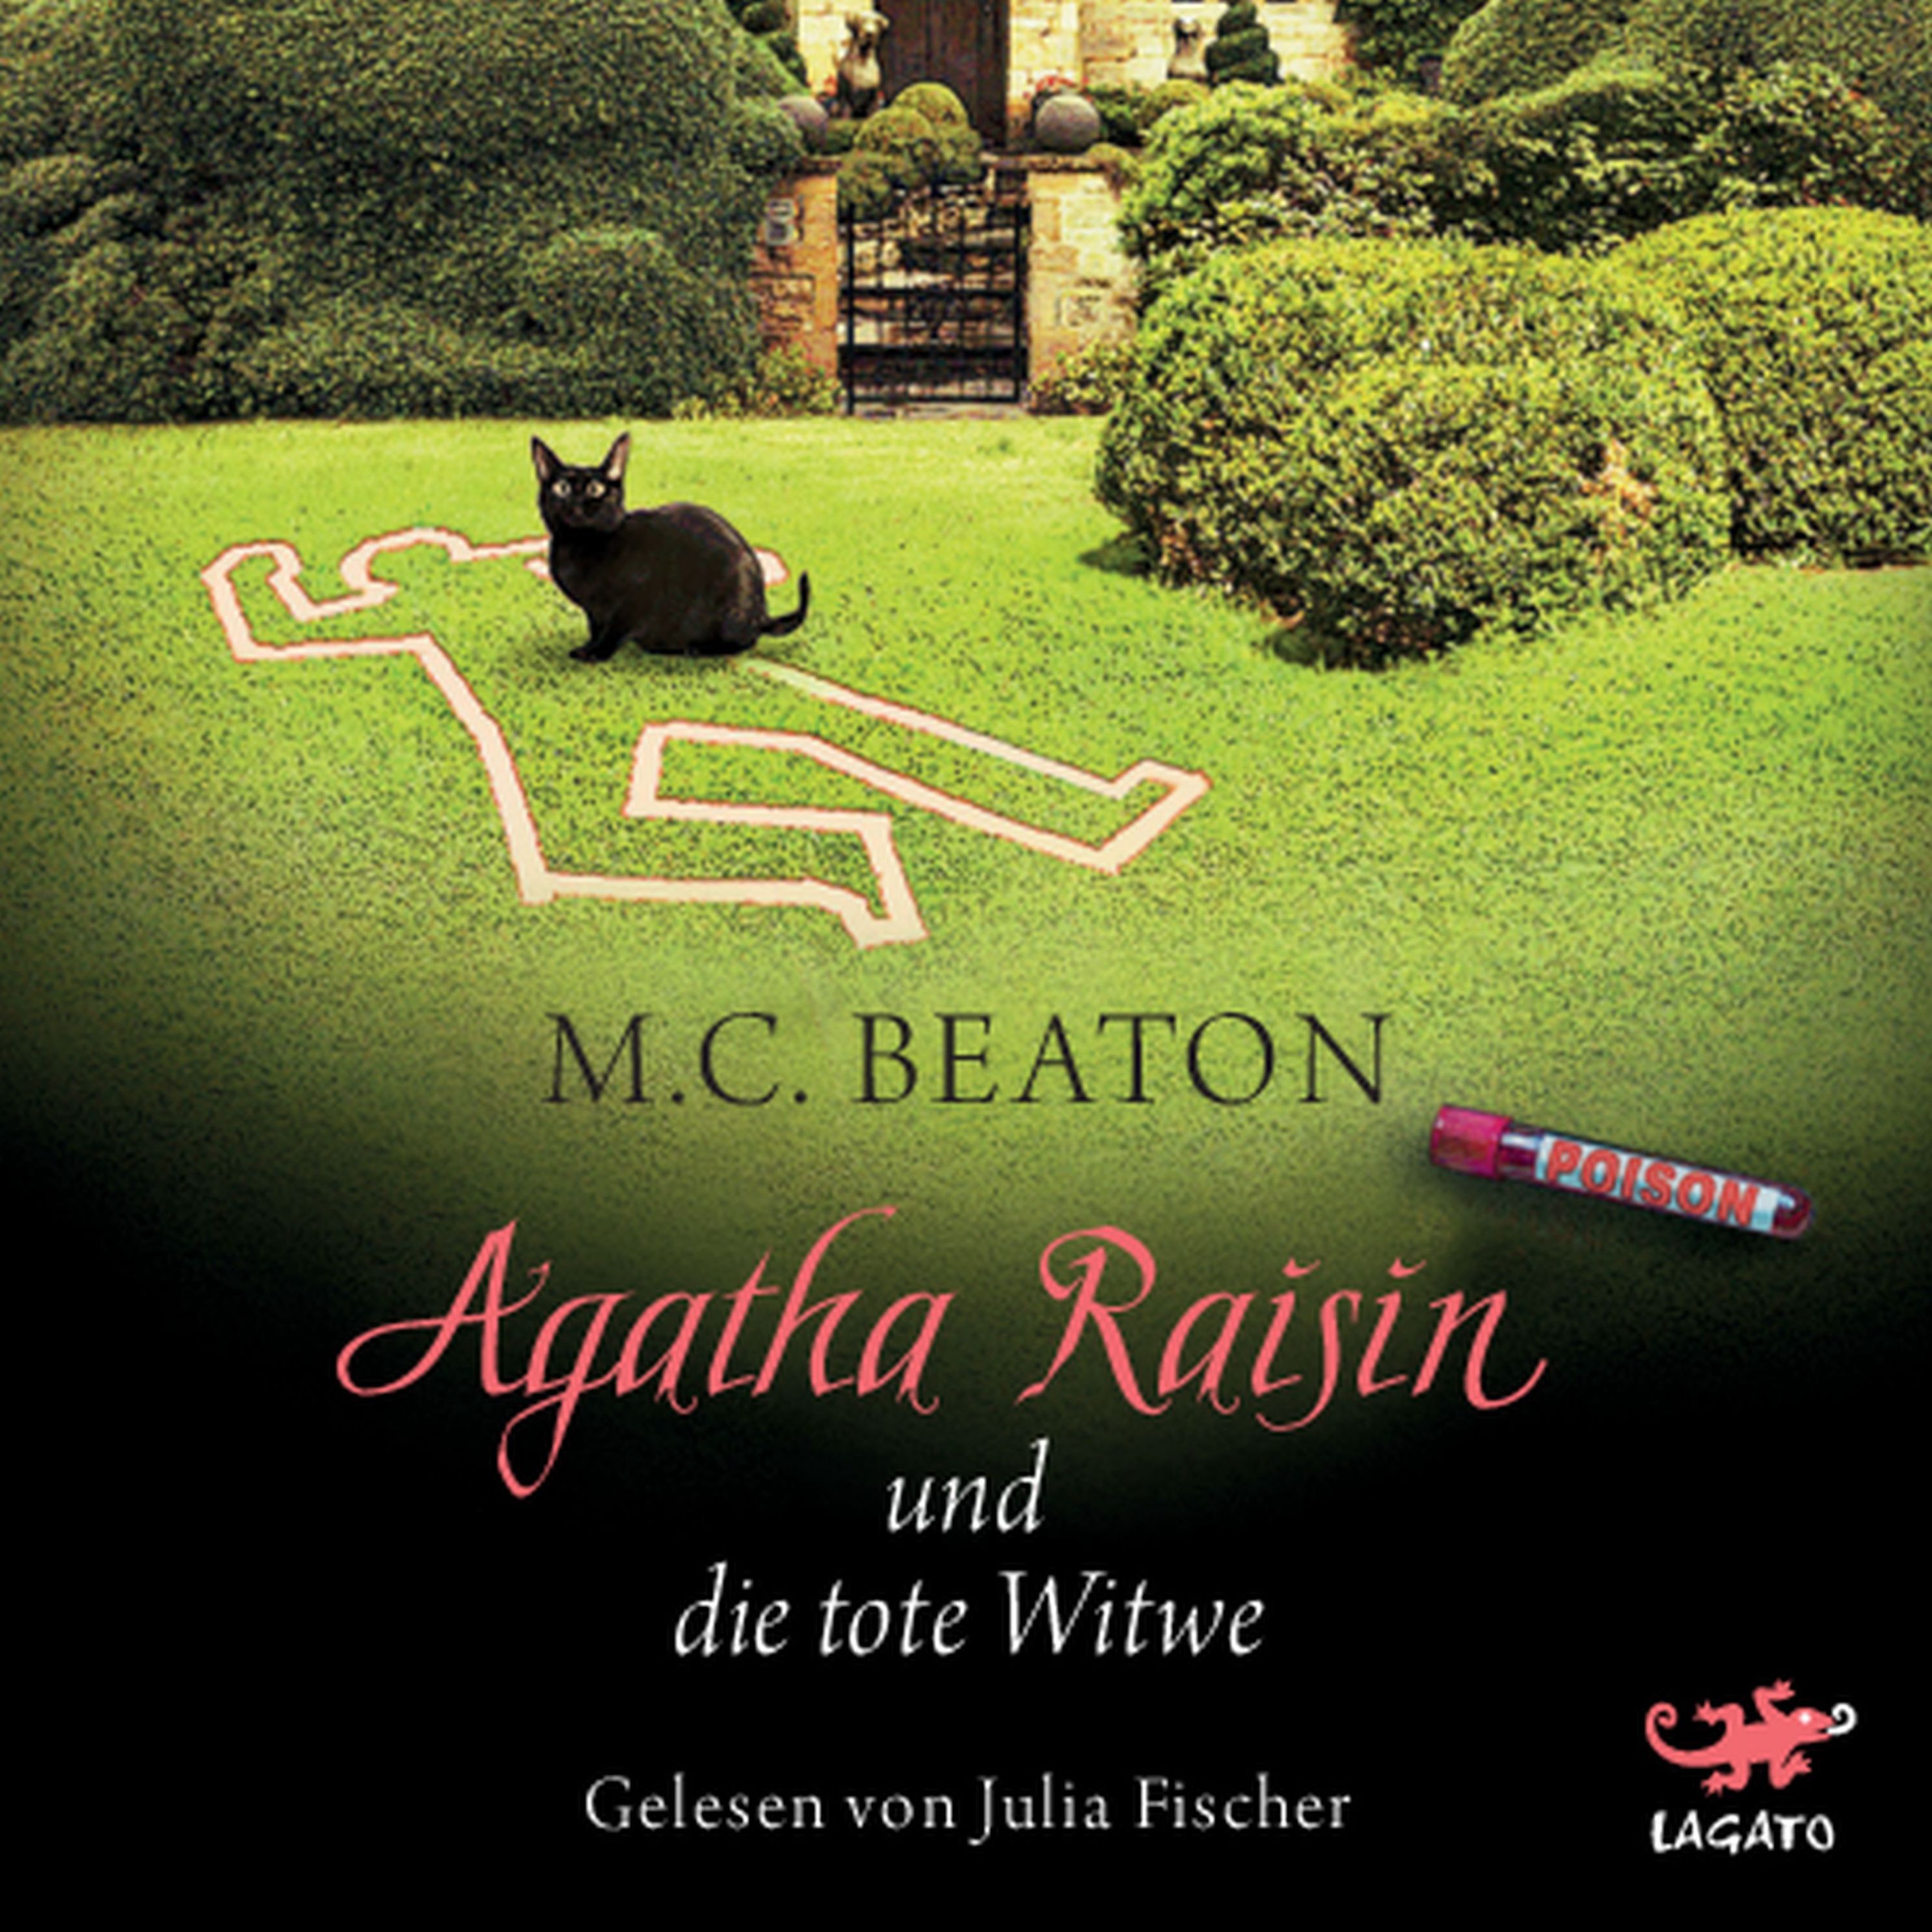 Agatha Raisin - 18 - Agatha Raisin und die tote Witwe Hörbuch Download